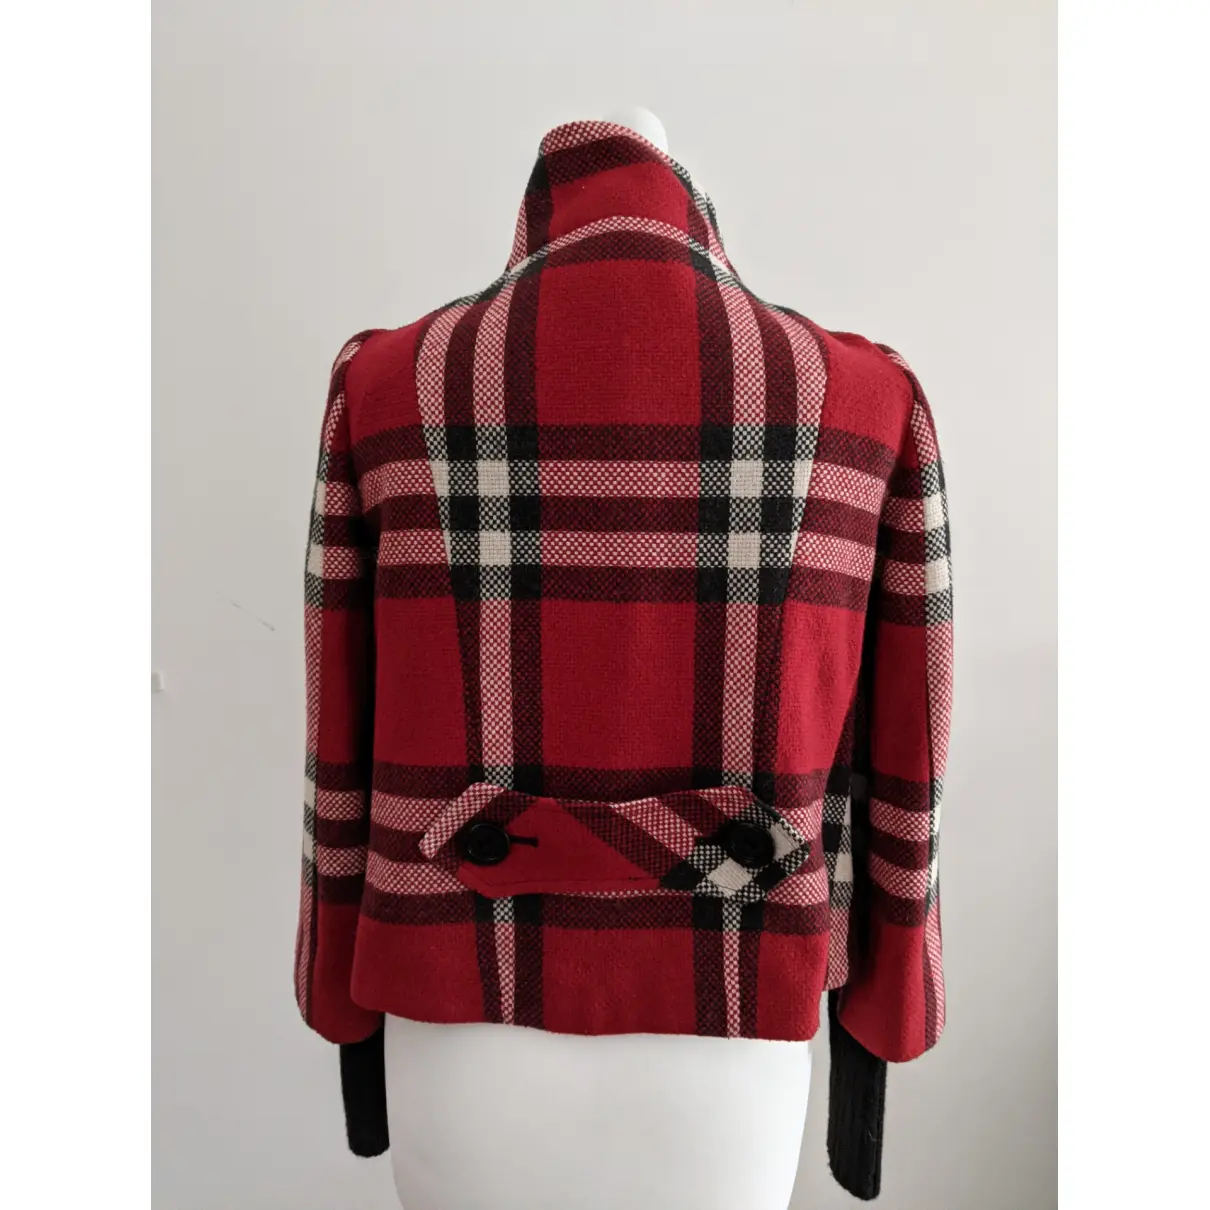 Buy PENNYBLACK Wool jacket online